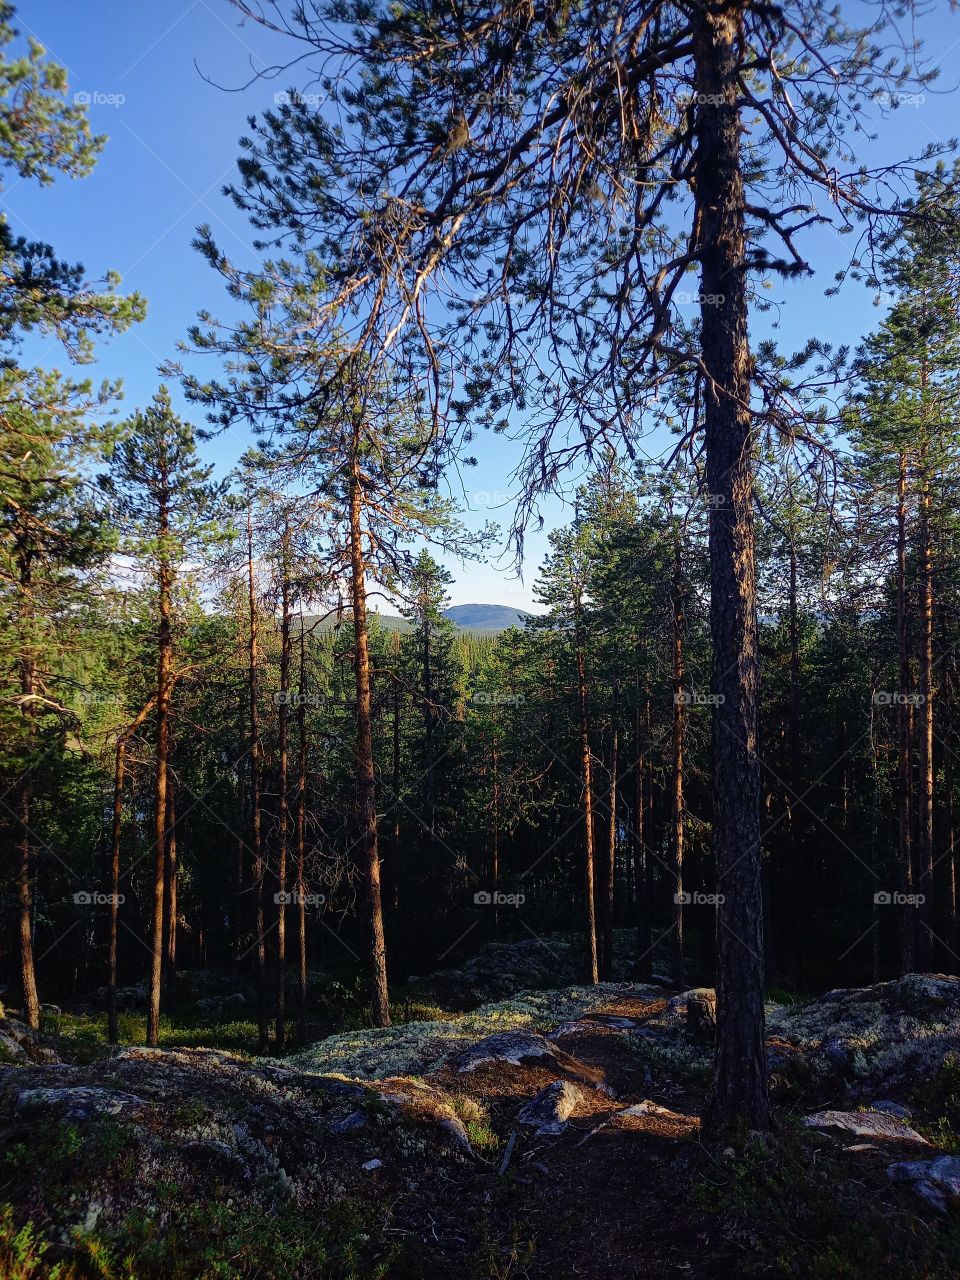 Pine forest in the Khibiny foothills, Murmansk region, Russia. Khibiny mountain range